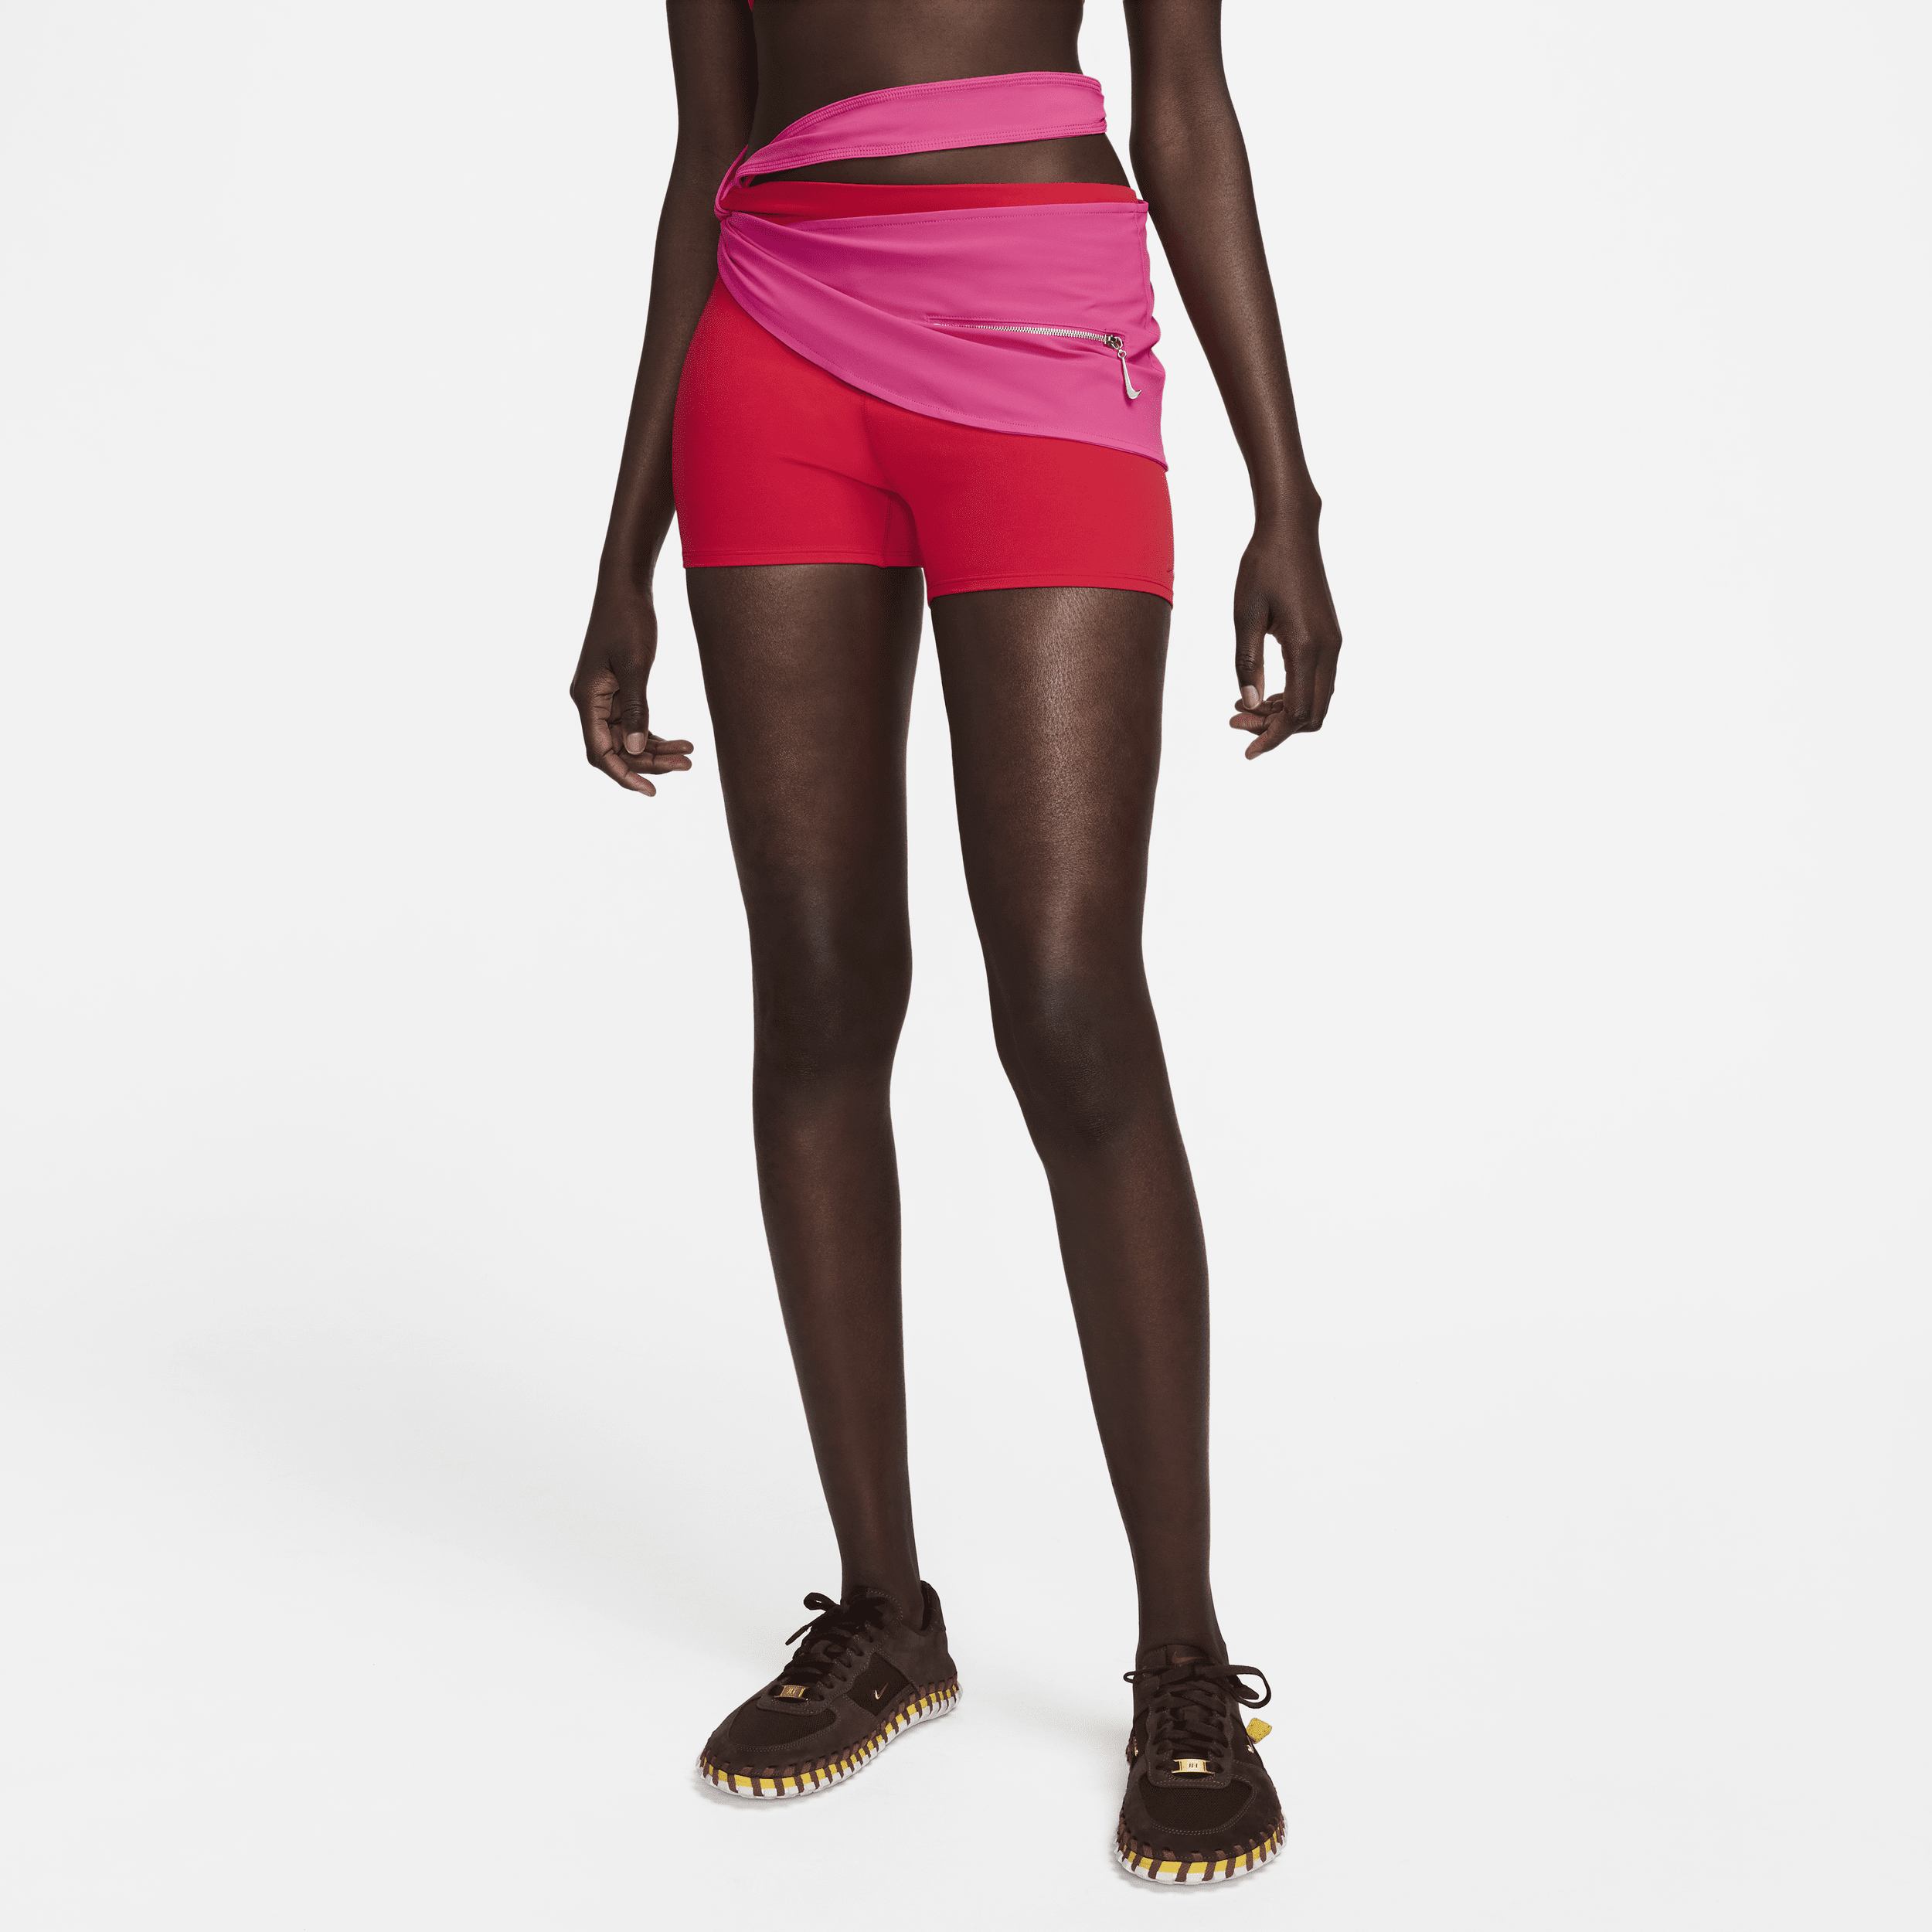 Lagdelte Nike x Jacquemus-shorts til kvinder - rød